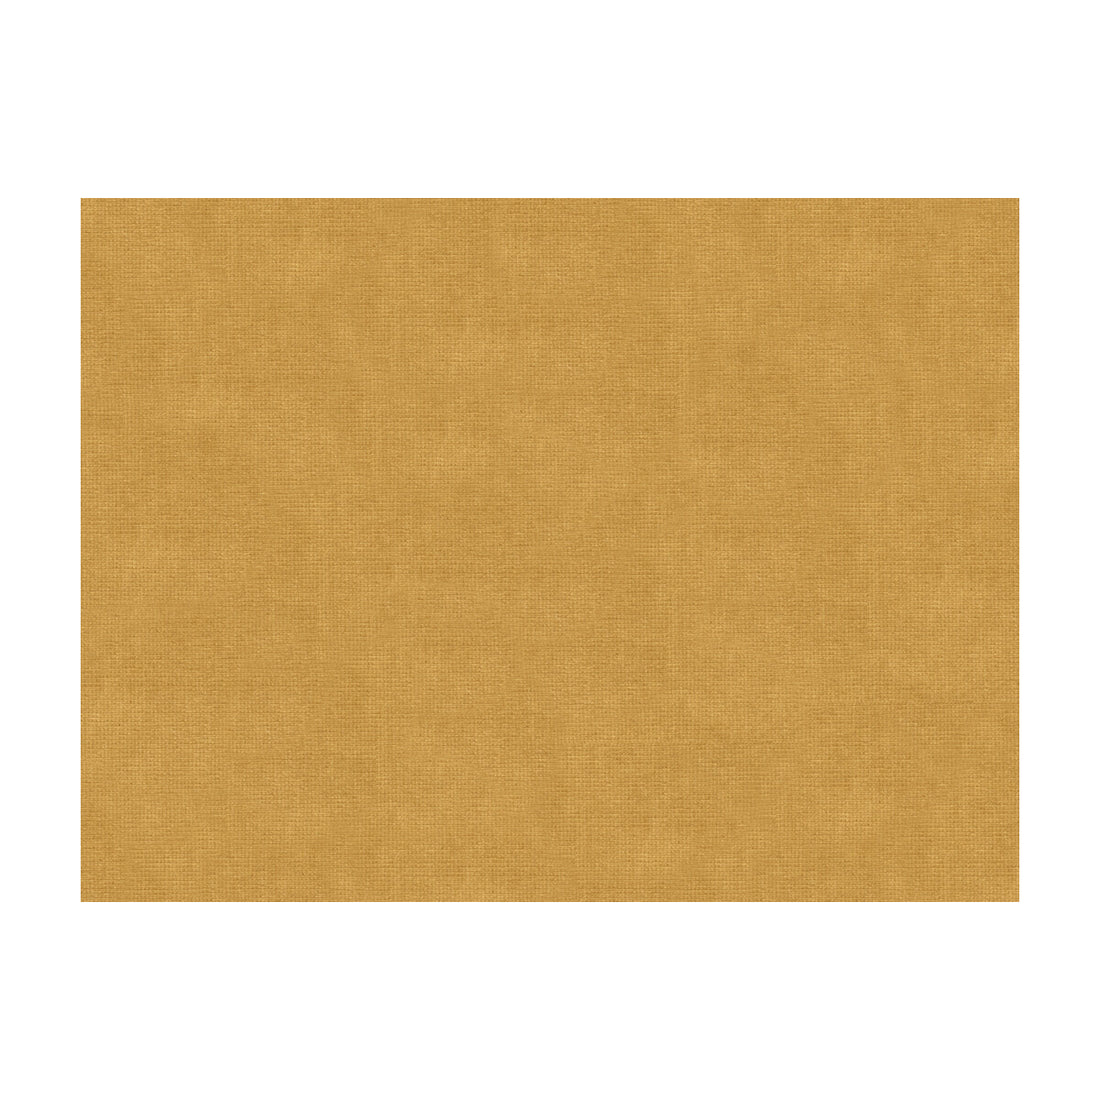 Charmant Velvet fabric in beige color - pattern 8013150.404.0 - by Brunschwig &amp; Fils